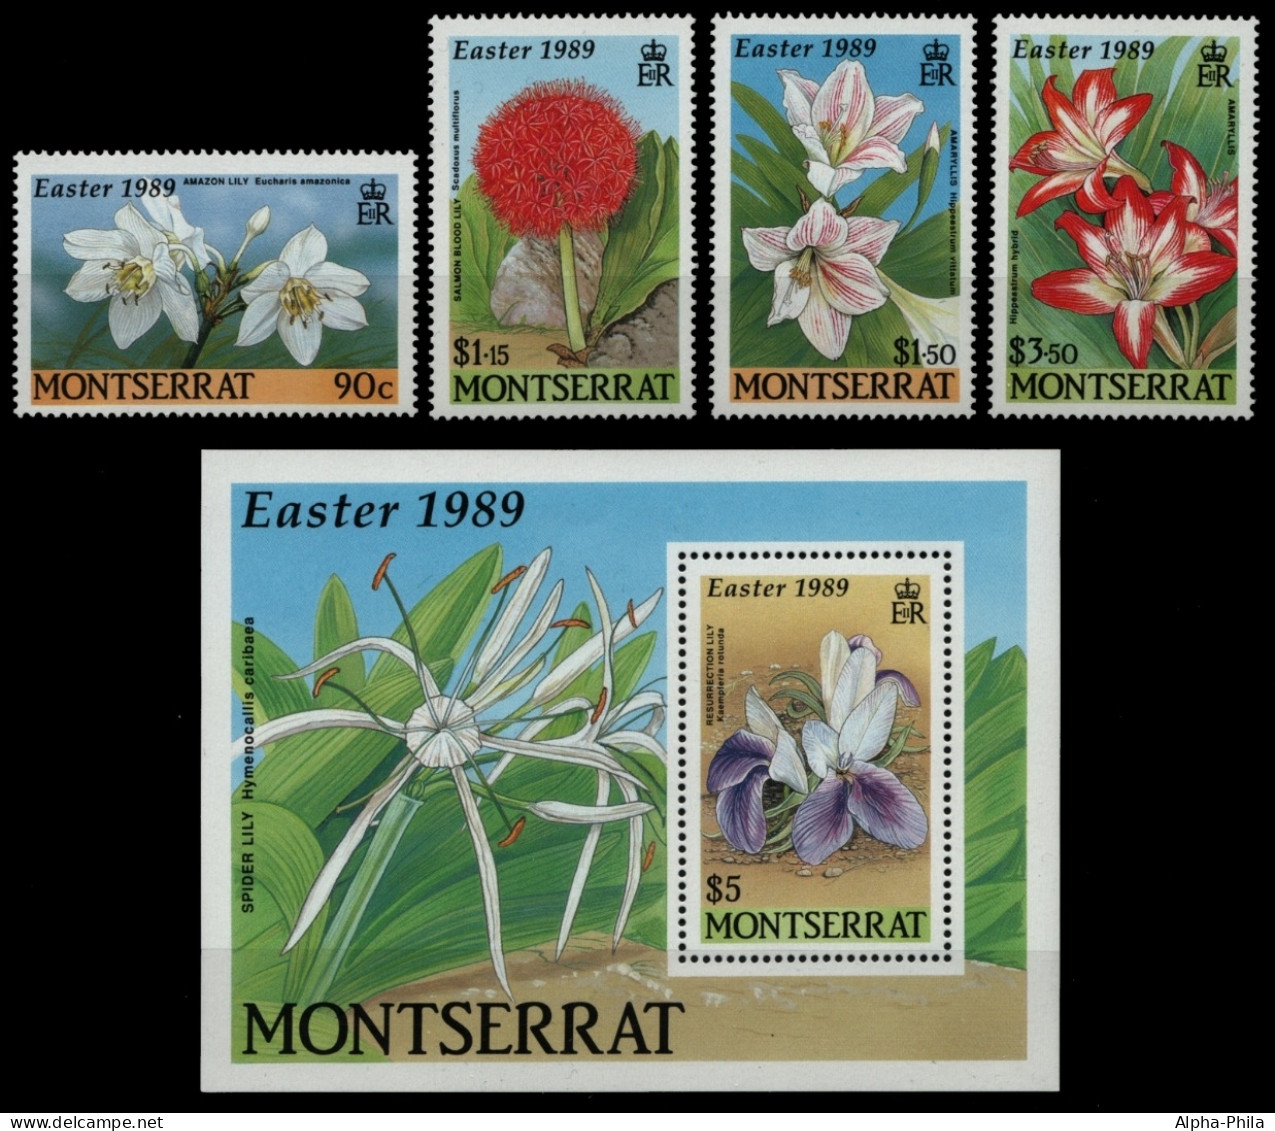 Montserrat 1989 - Mi-Nr. 741-744 & Block 52 ** - MNH - Blumen / Flowers - Montserrat